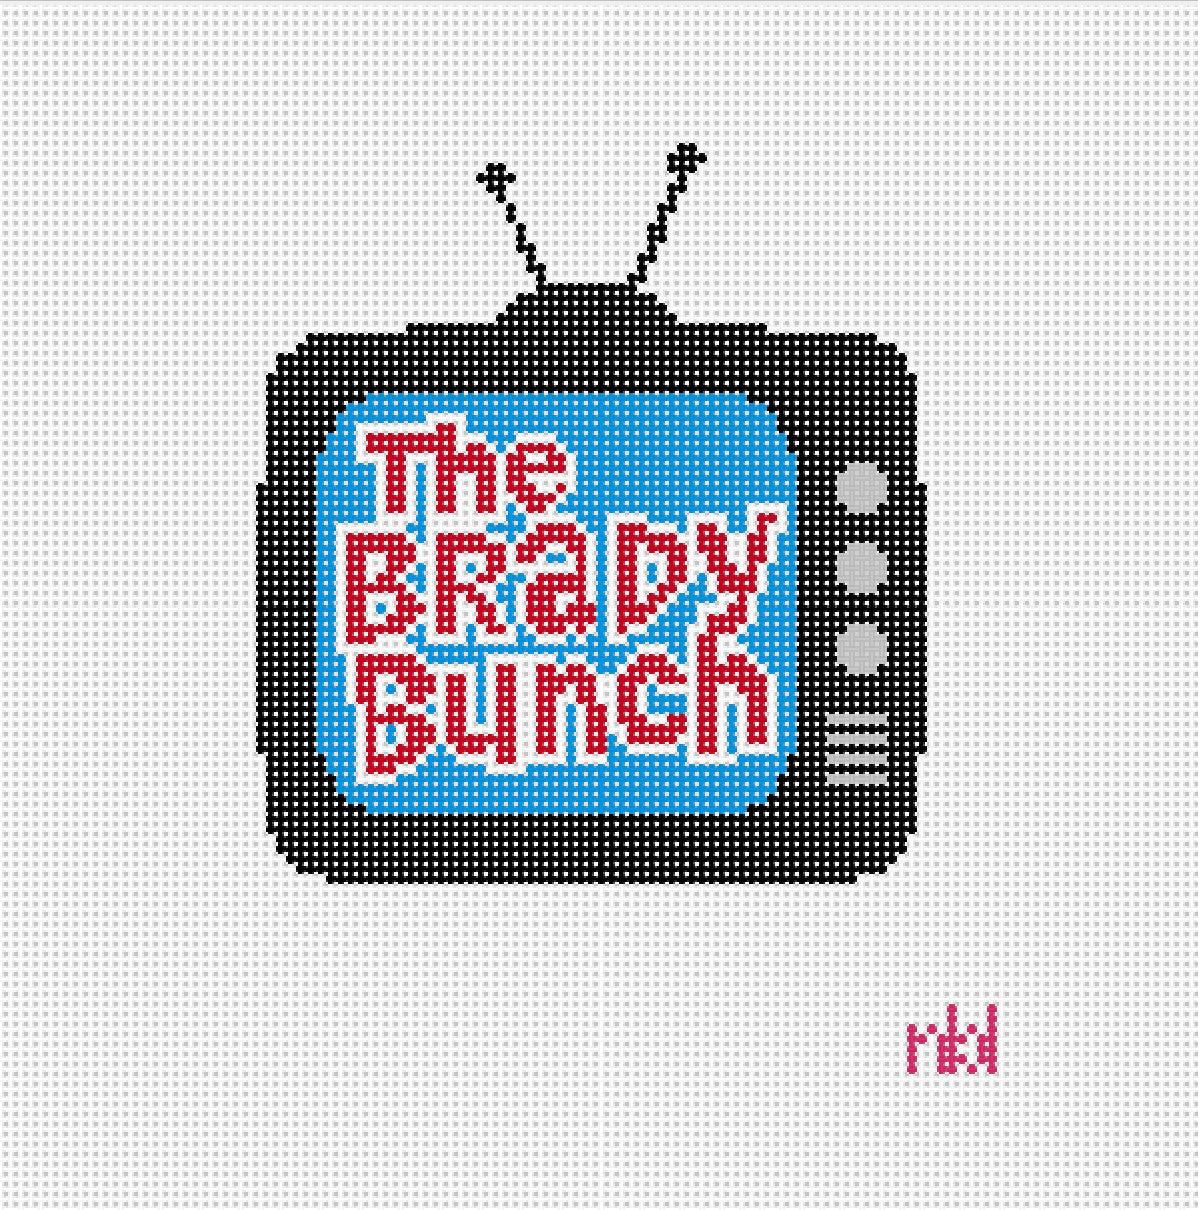 Retro TV Needlepoint Canvas Brady Bunch - Needlepoint by Laura